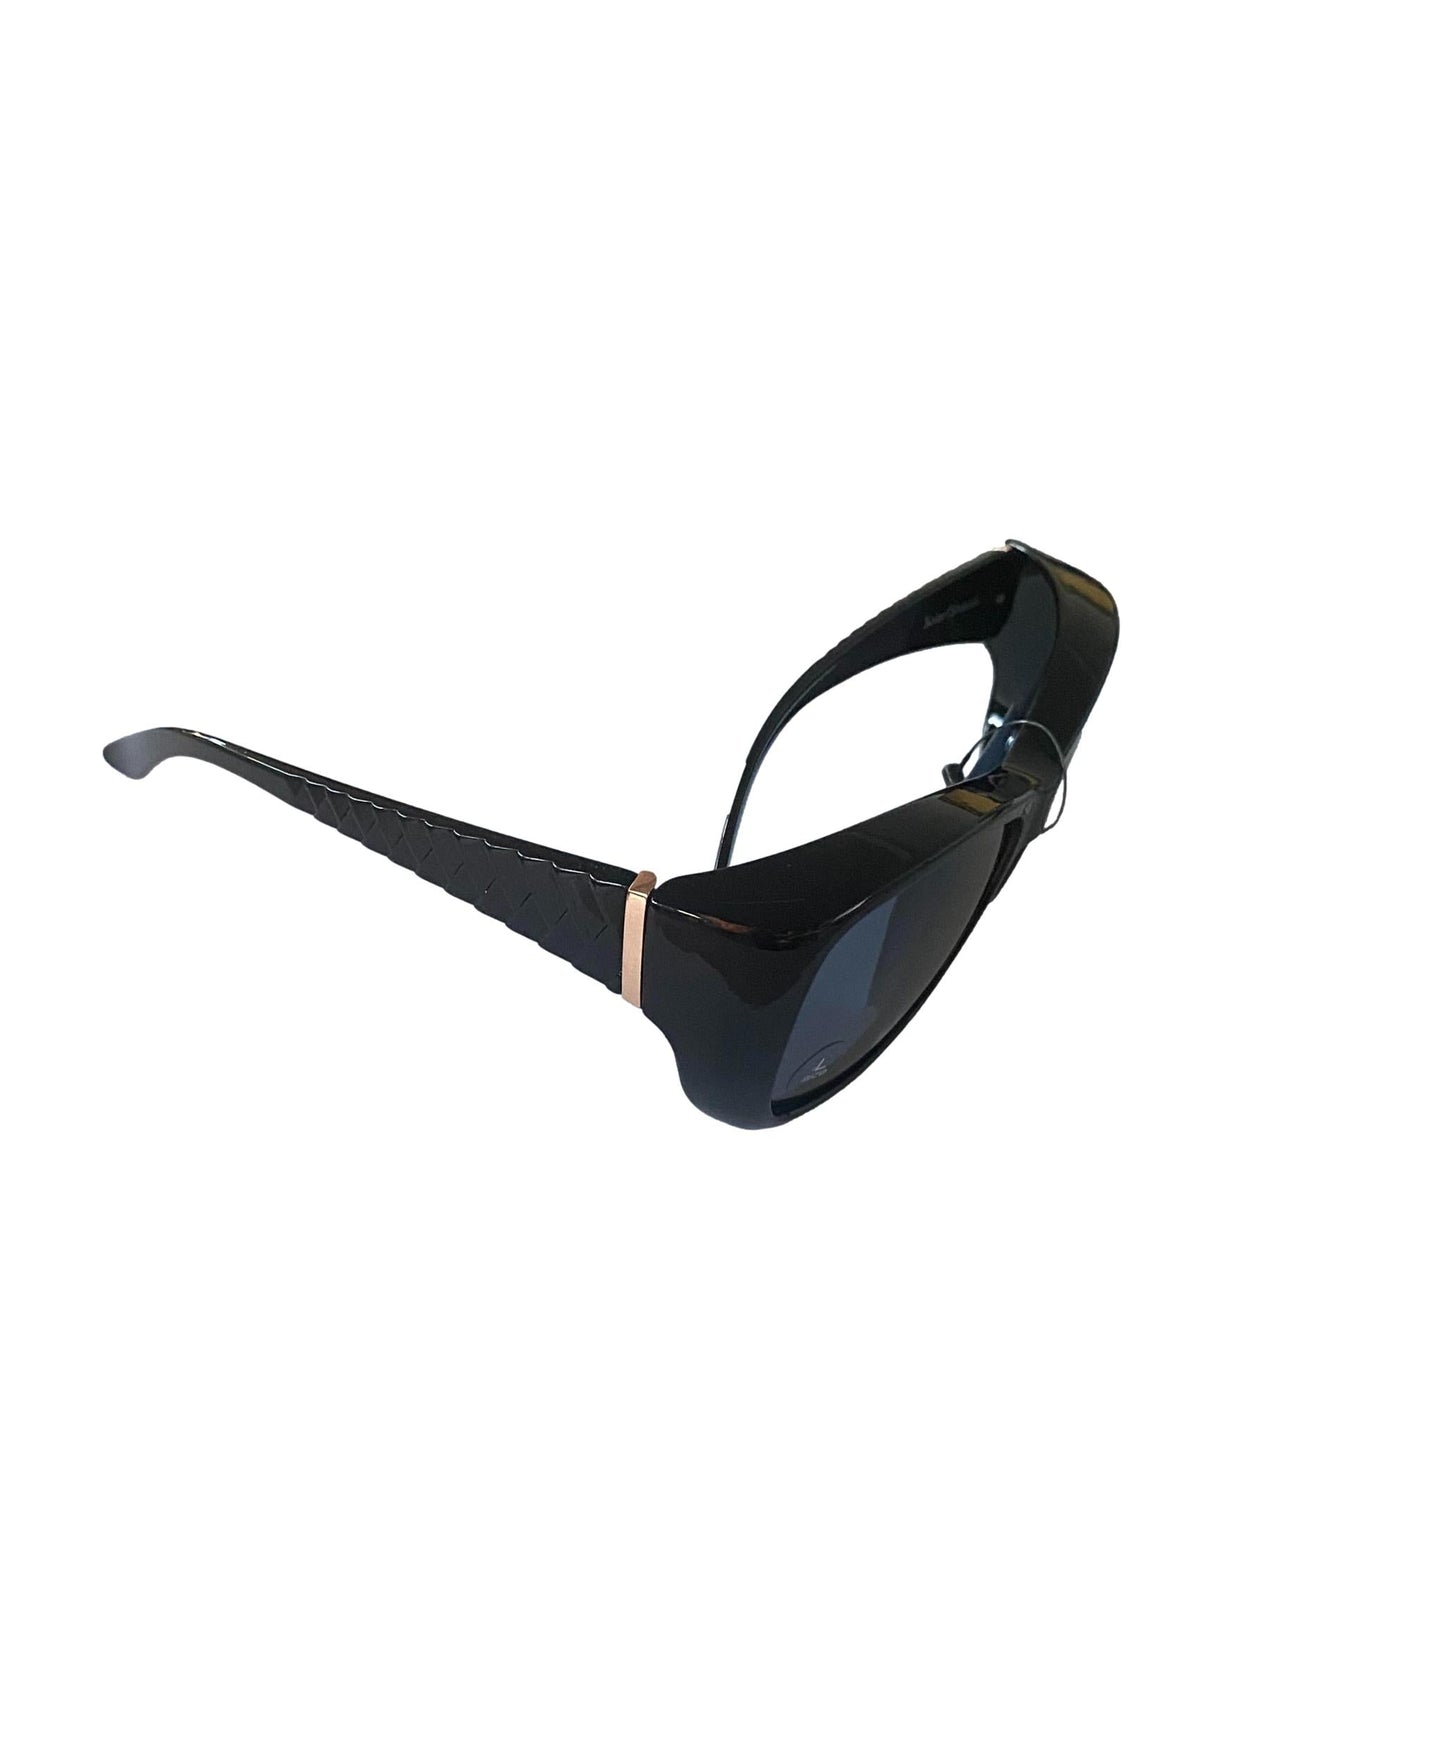 Solar Shield Fits Over FO-031 LG black polarized sunglasses NEW!